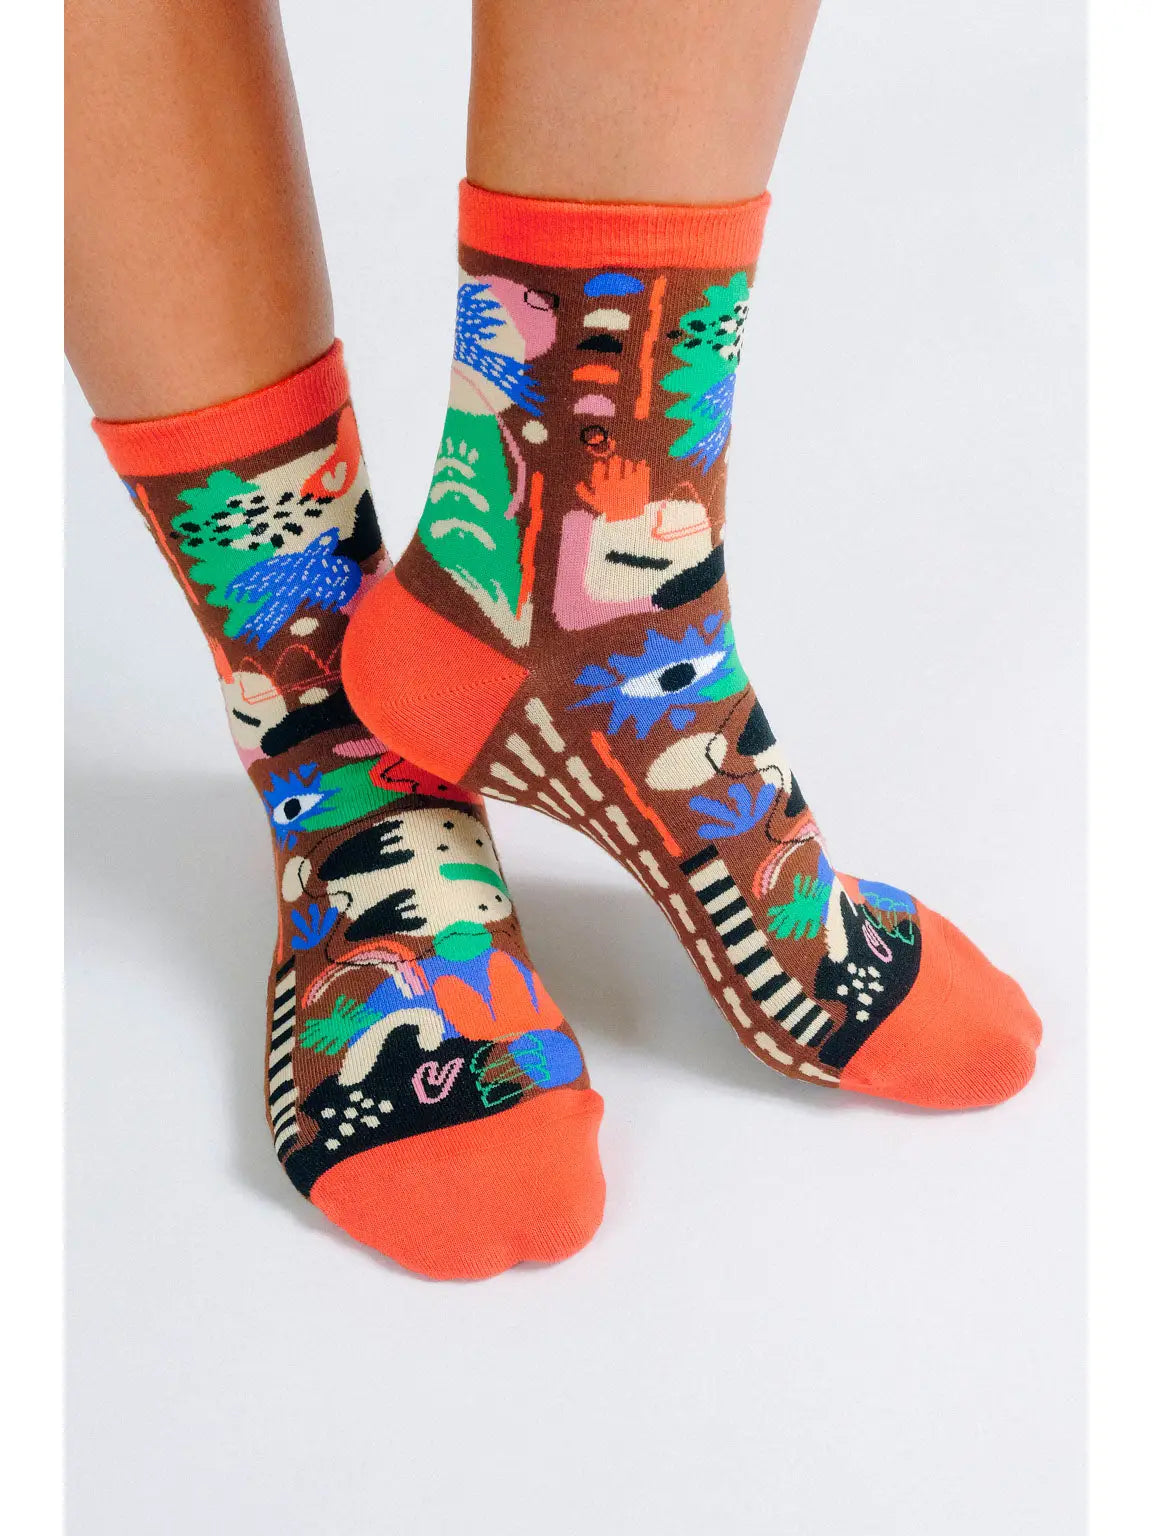 Matisse Ankle Socks by Mür by Ayca